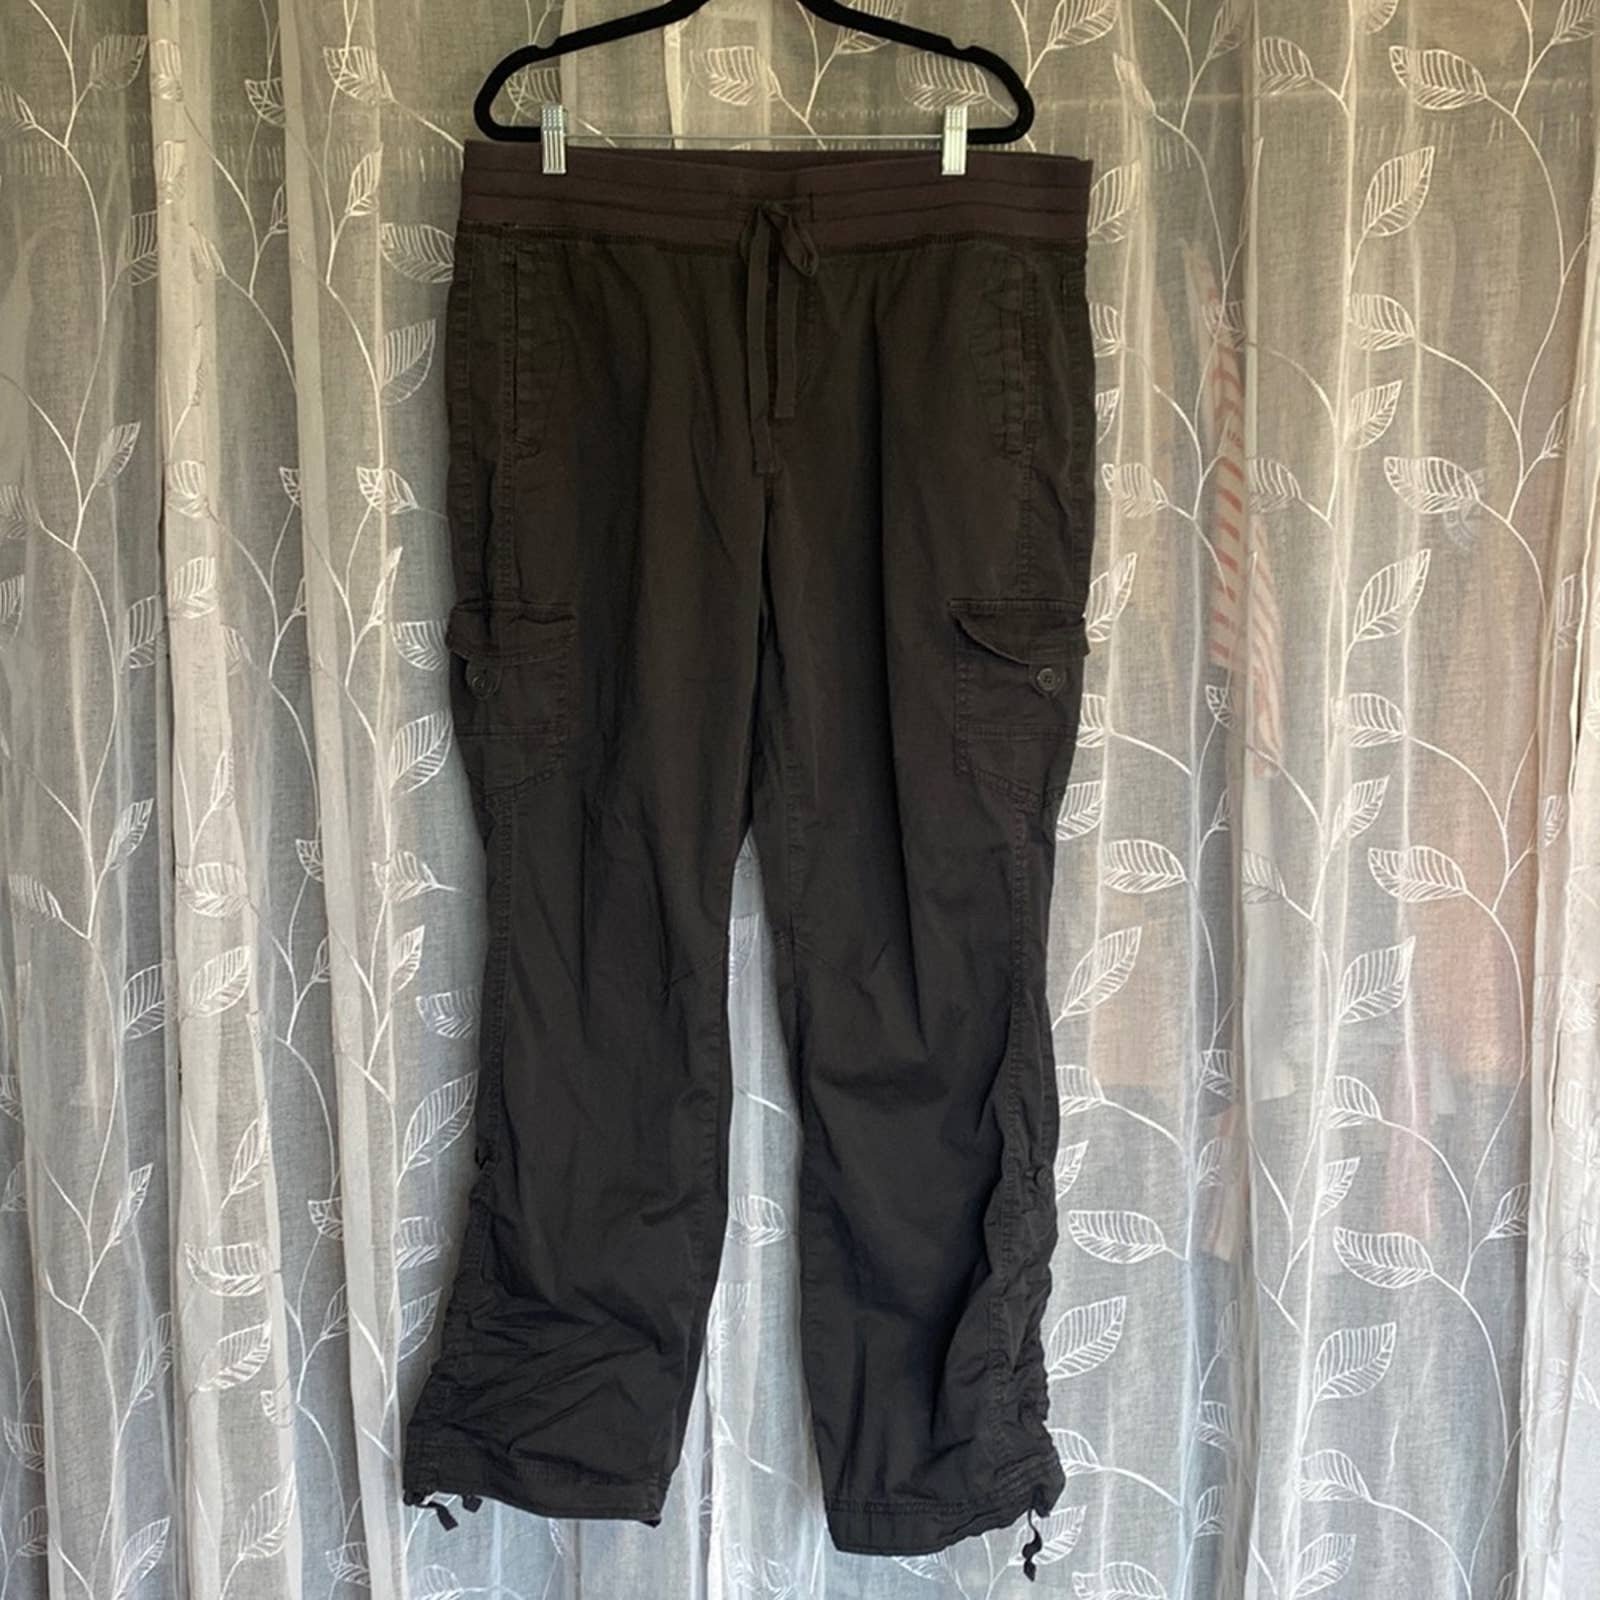 Simple Supplies gray cargo style pants drawstring waist